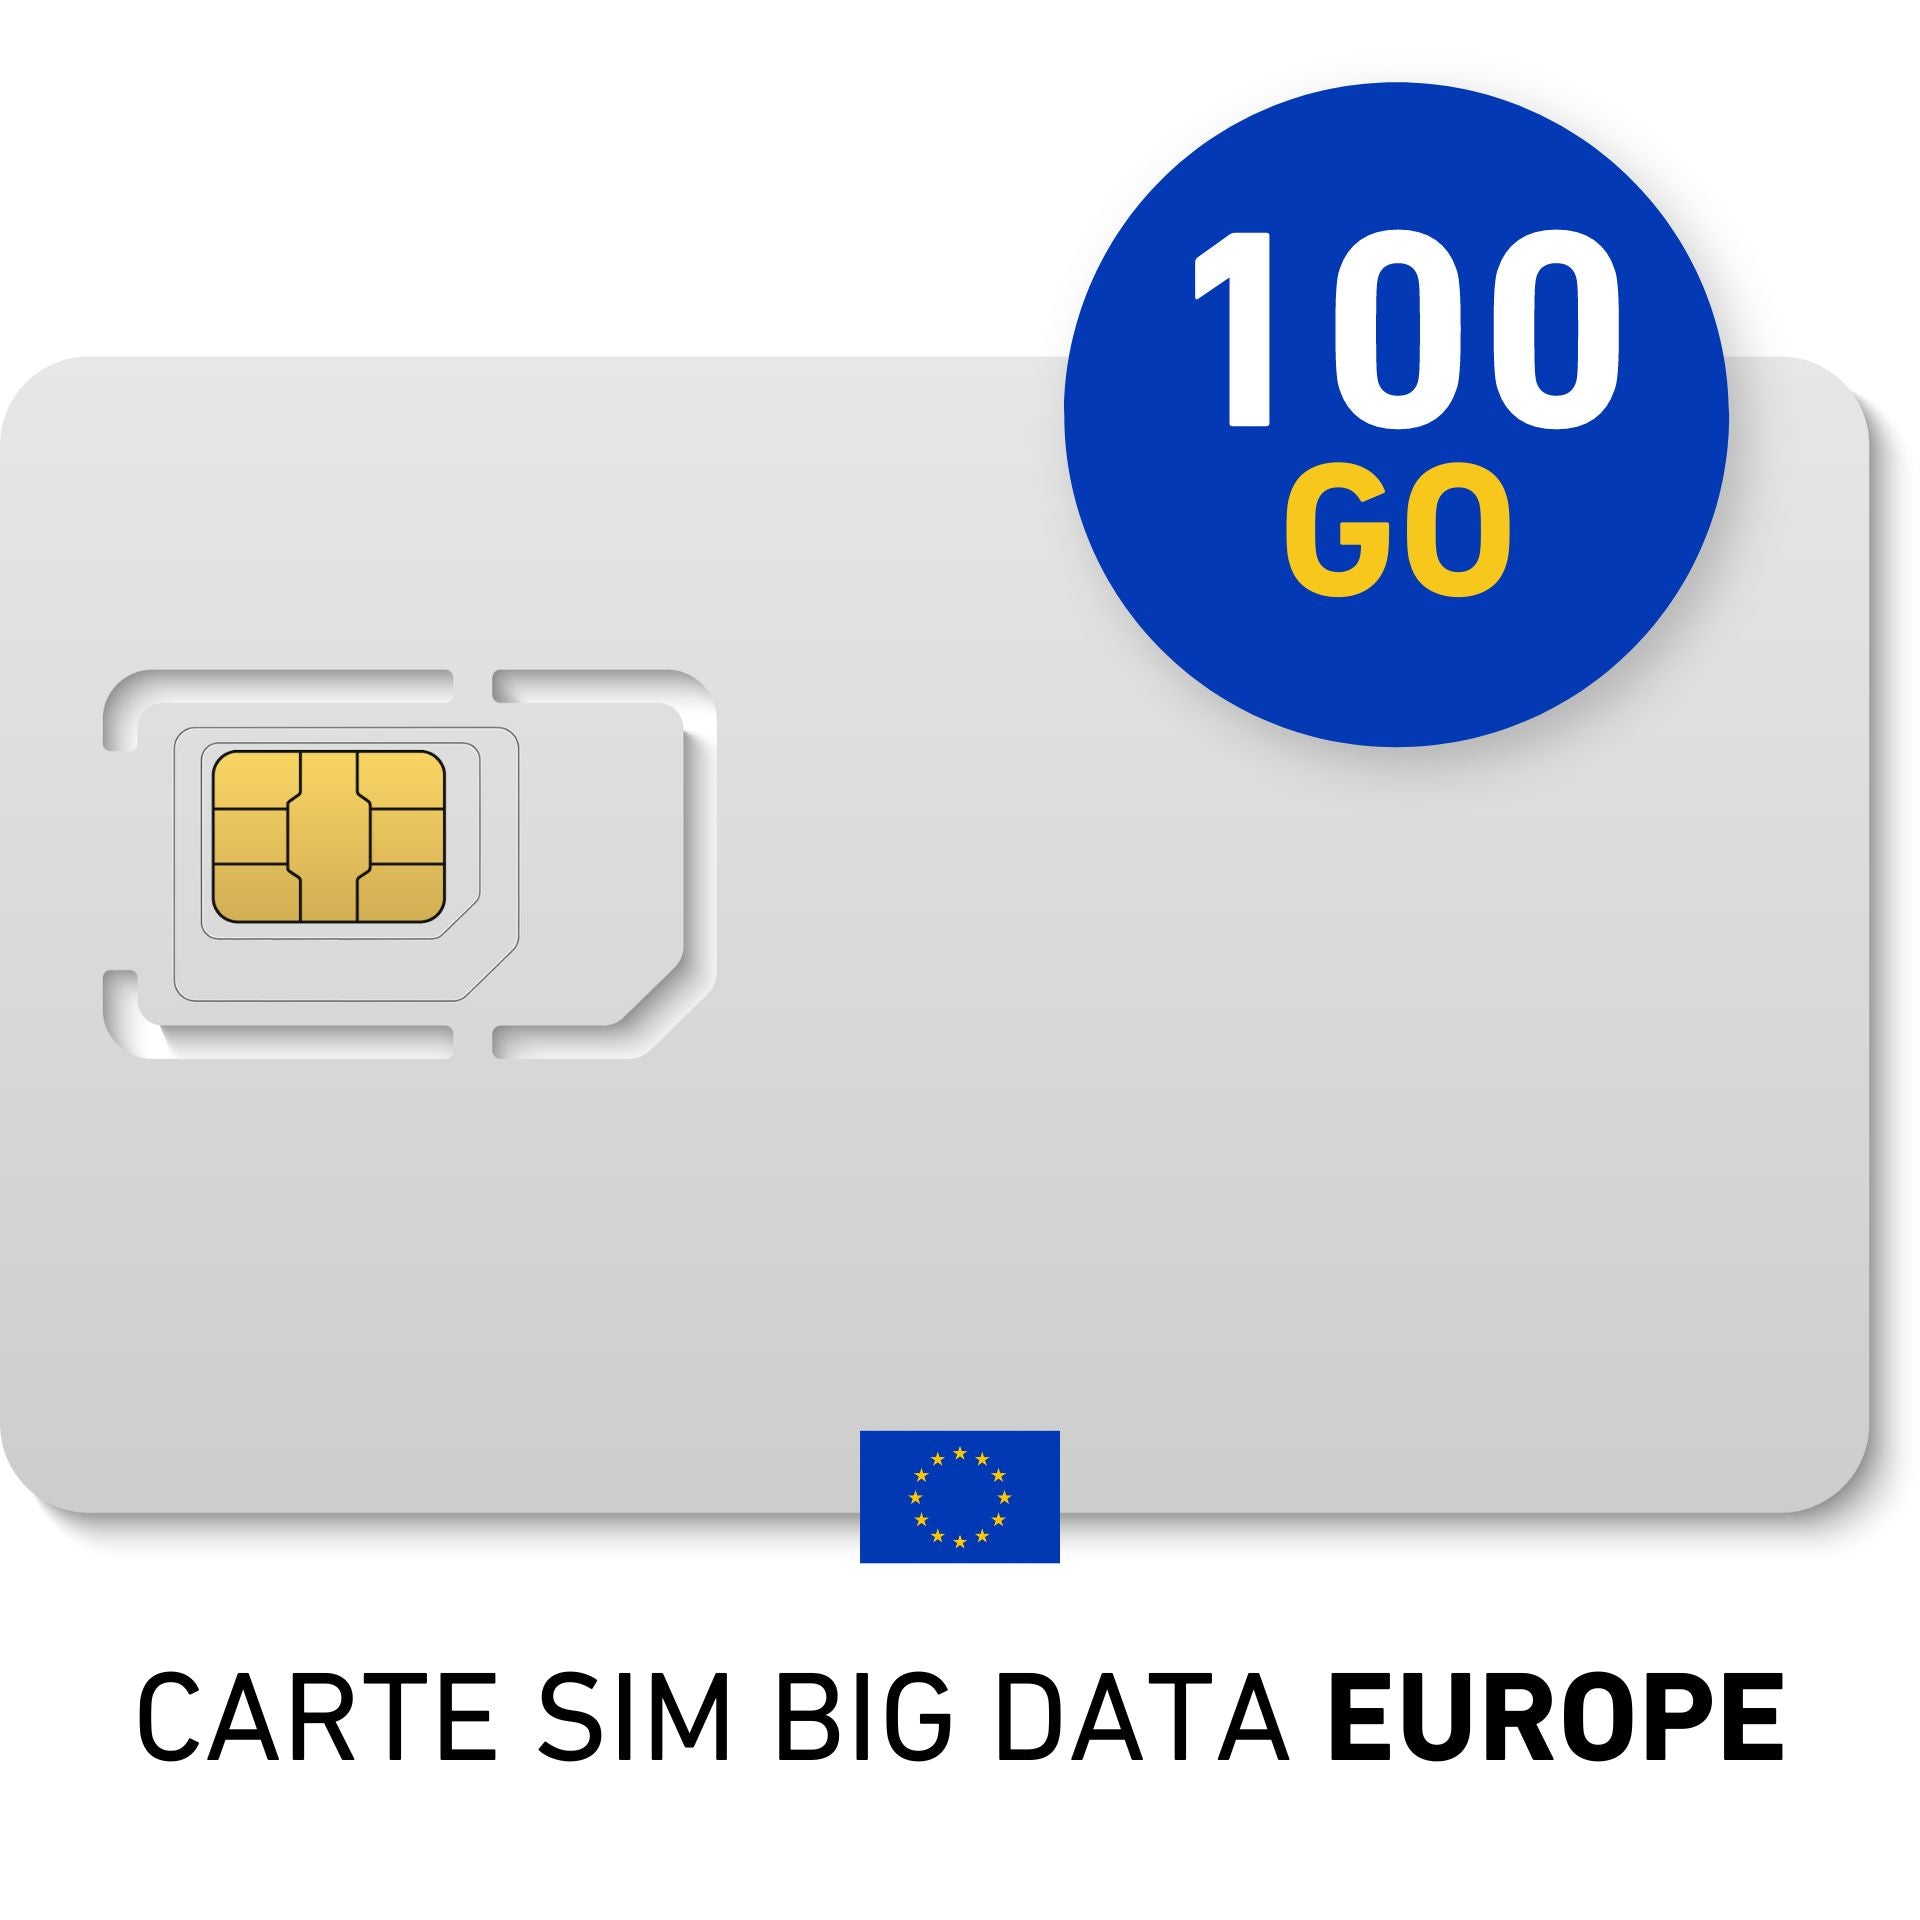 Abono mensual TARJETA SIM Grandes Datos Europa 100Go